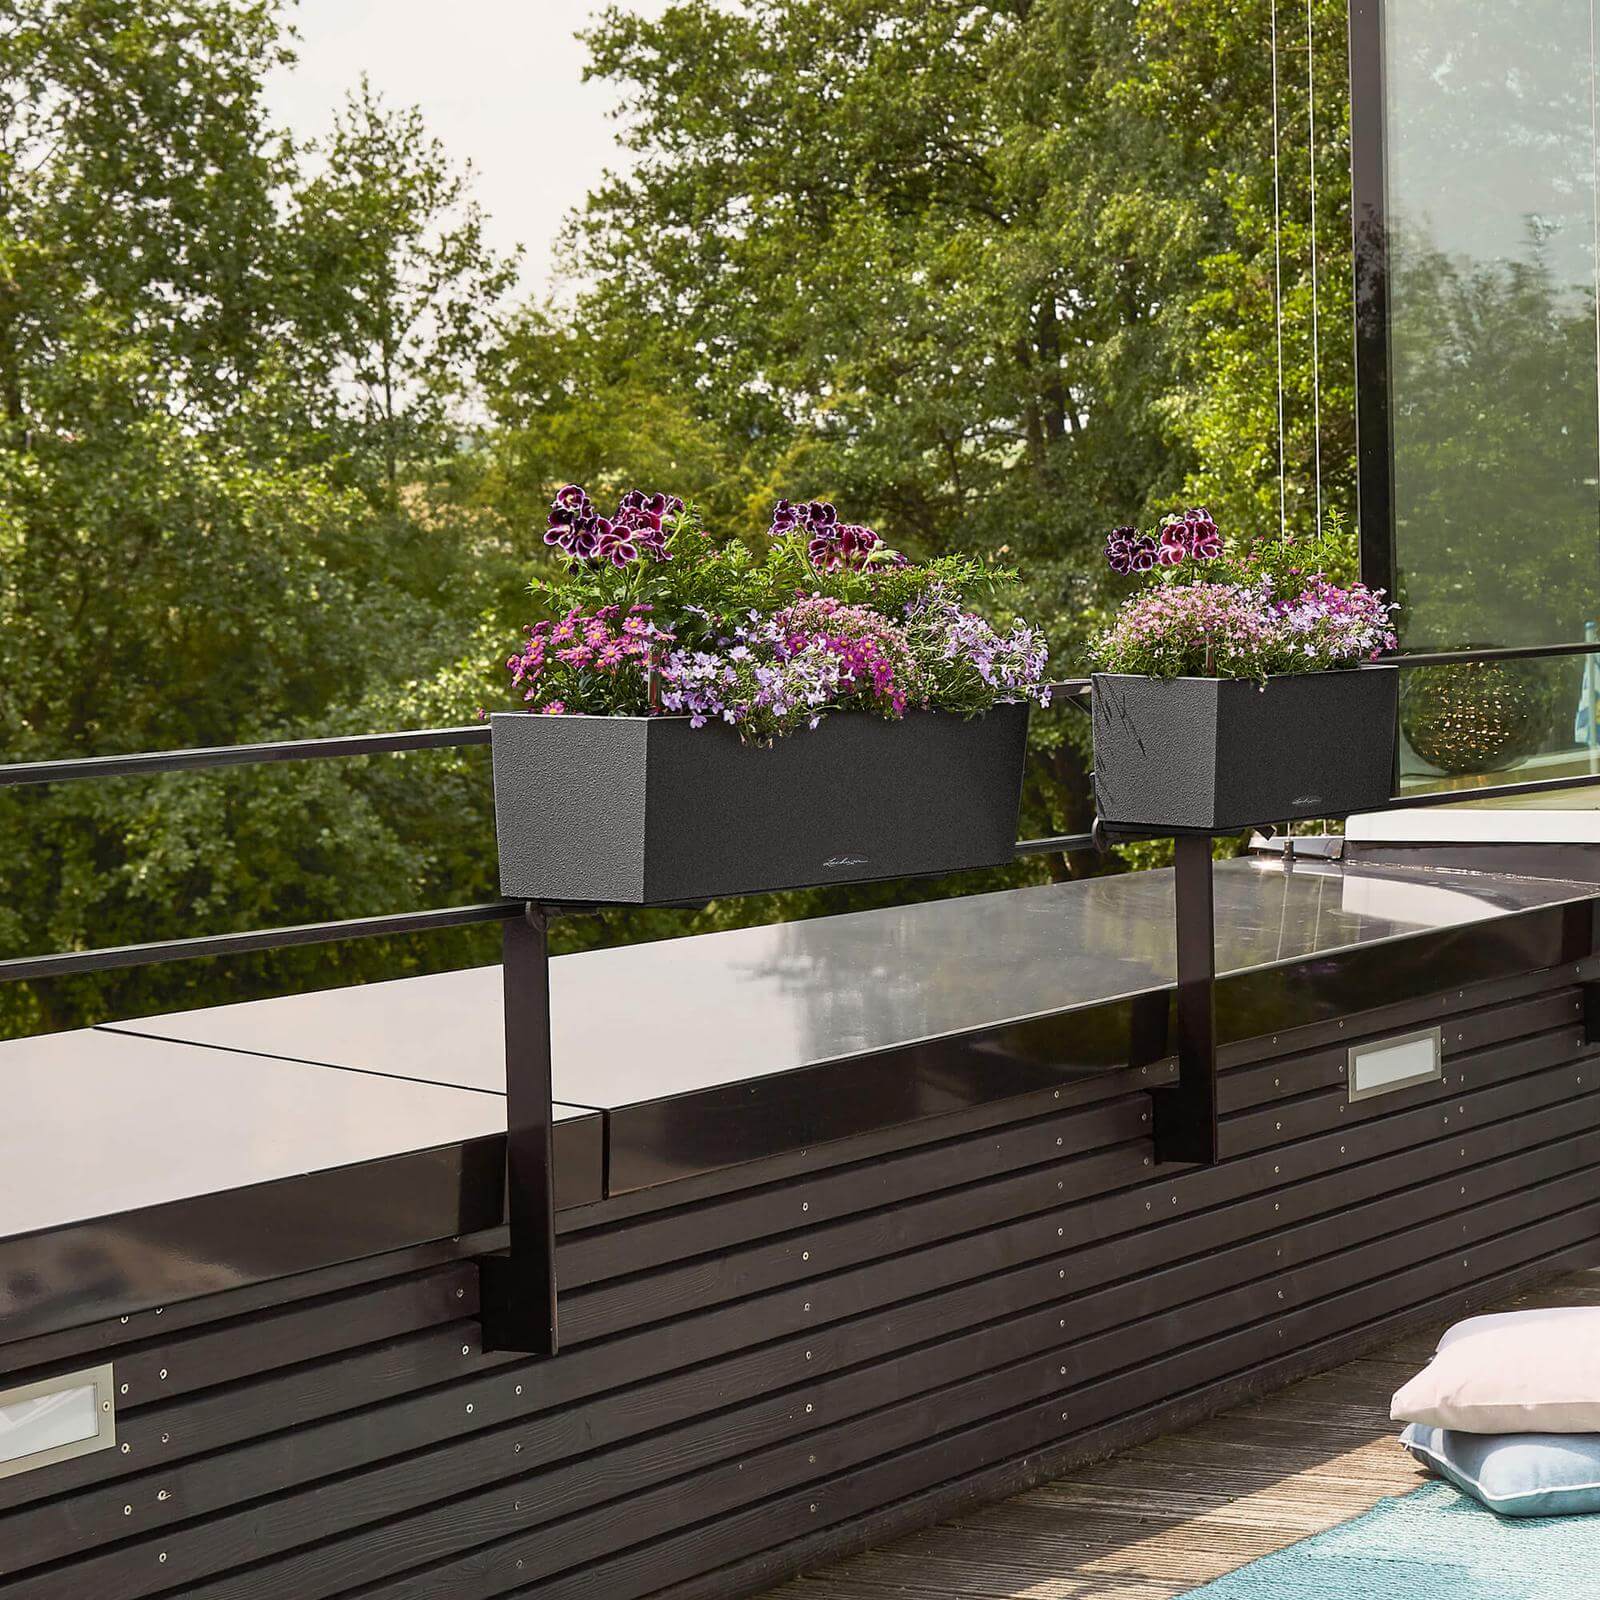 Se Lechuza Balconera Stone udendørs krukke til blomster med selvvandingssystem Graphite black 50 x 19 x H19 cm hos InGarden.dk